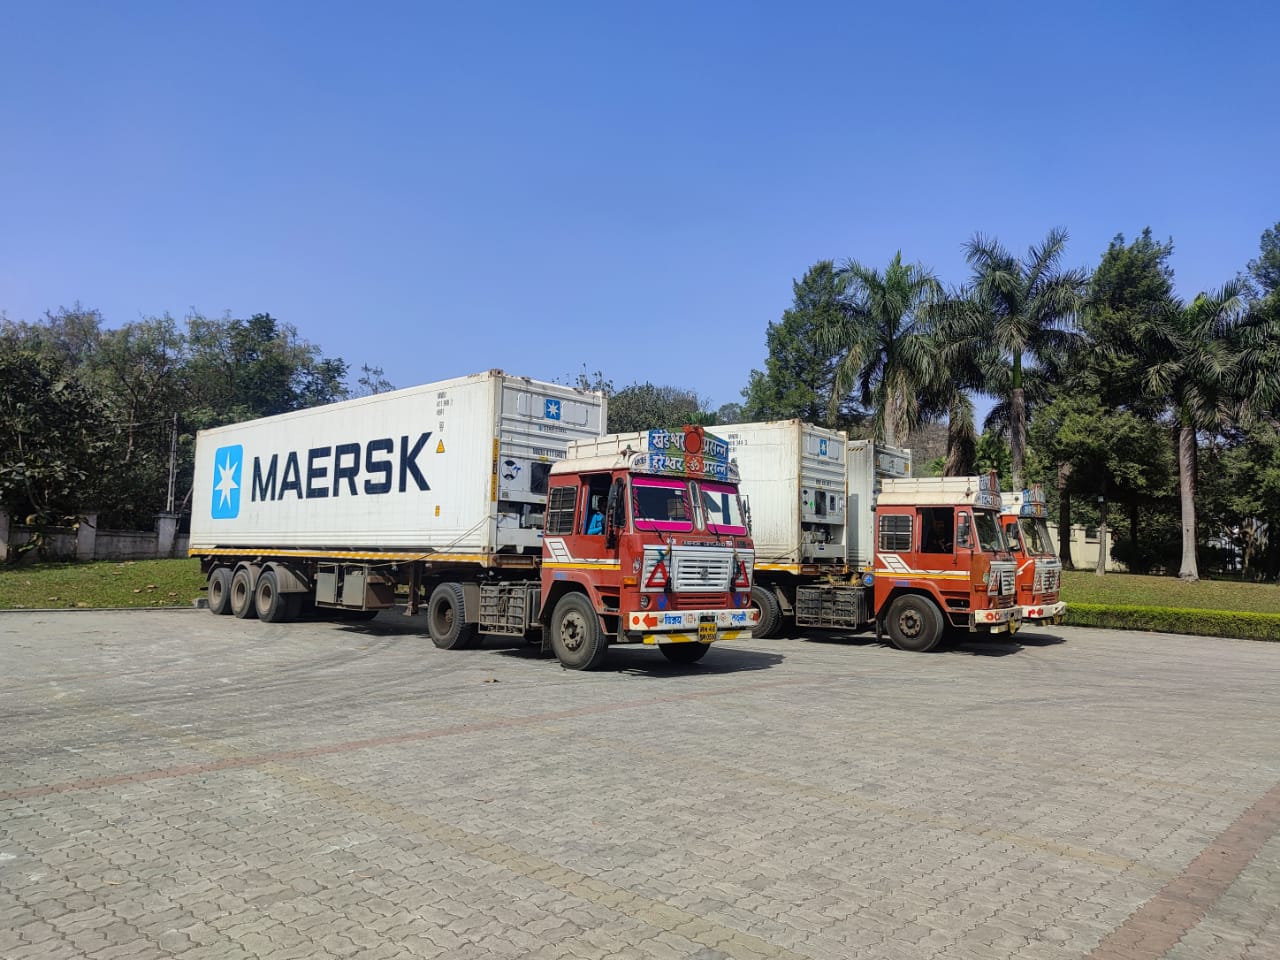 Maersk truck